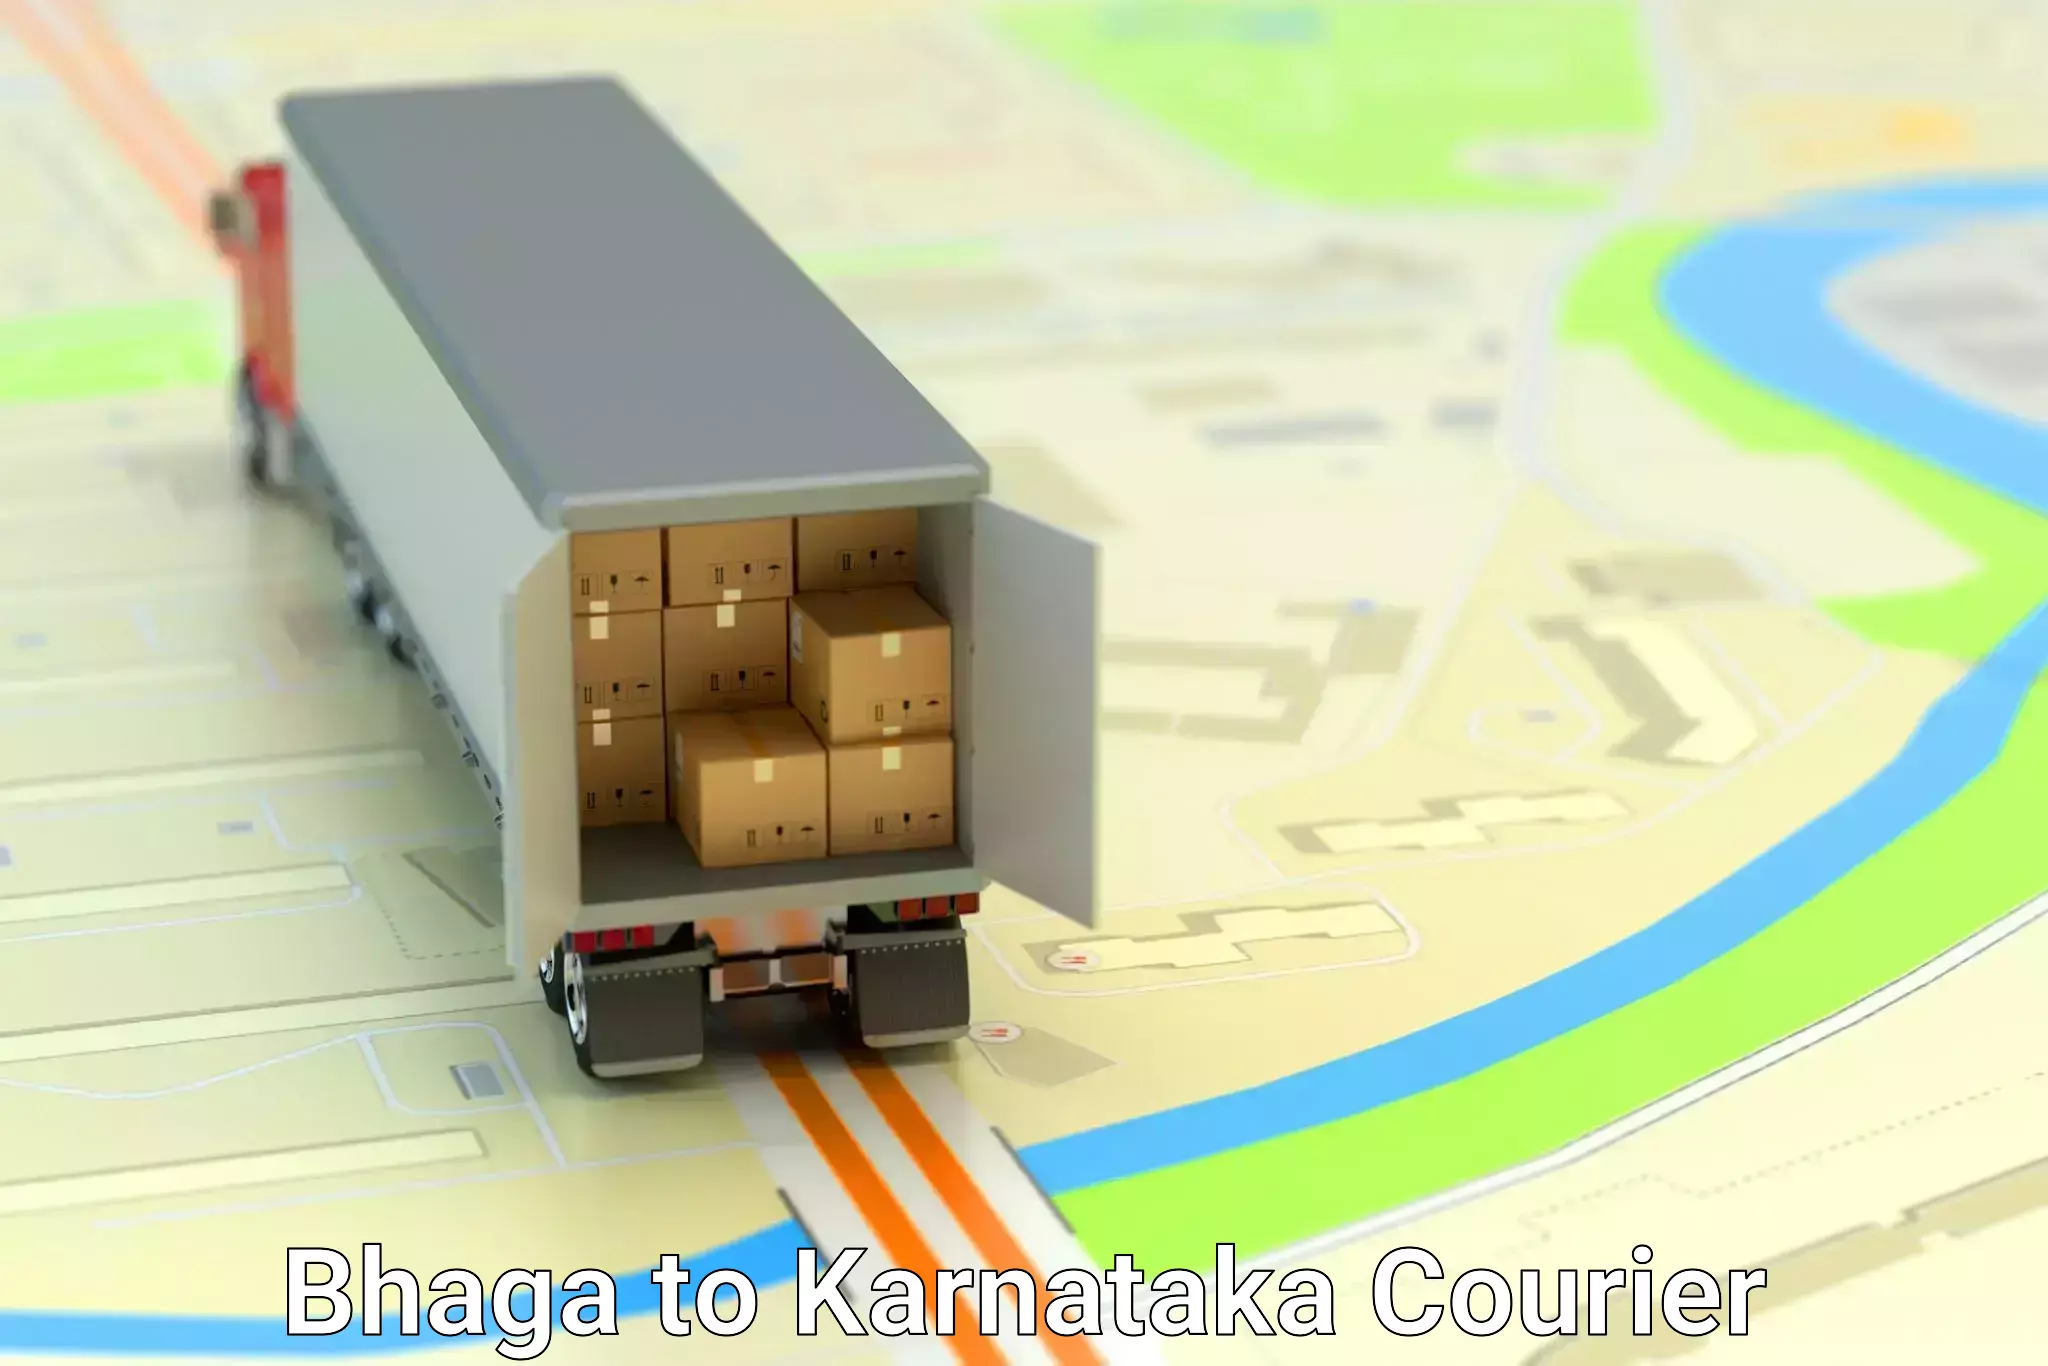 State-of-the-art courier technology Bhaga to Doddaballapura